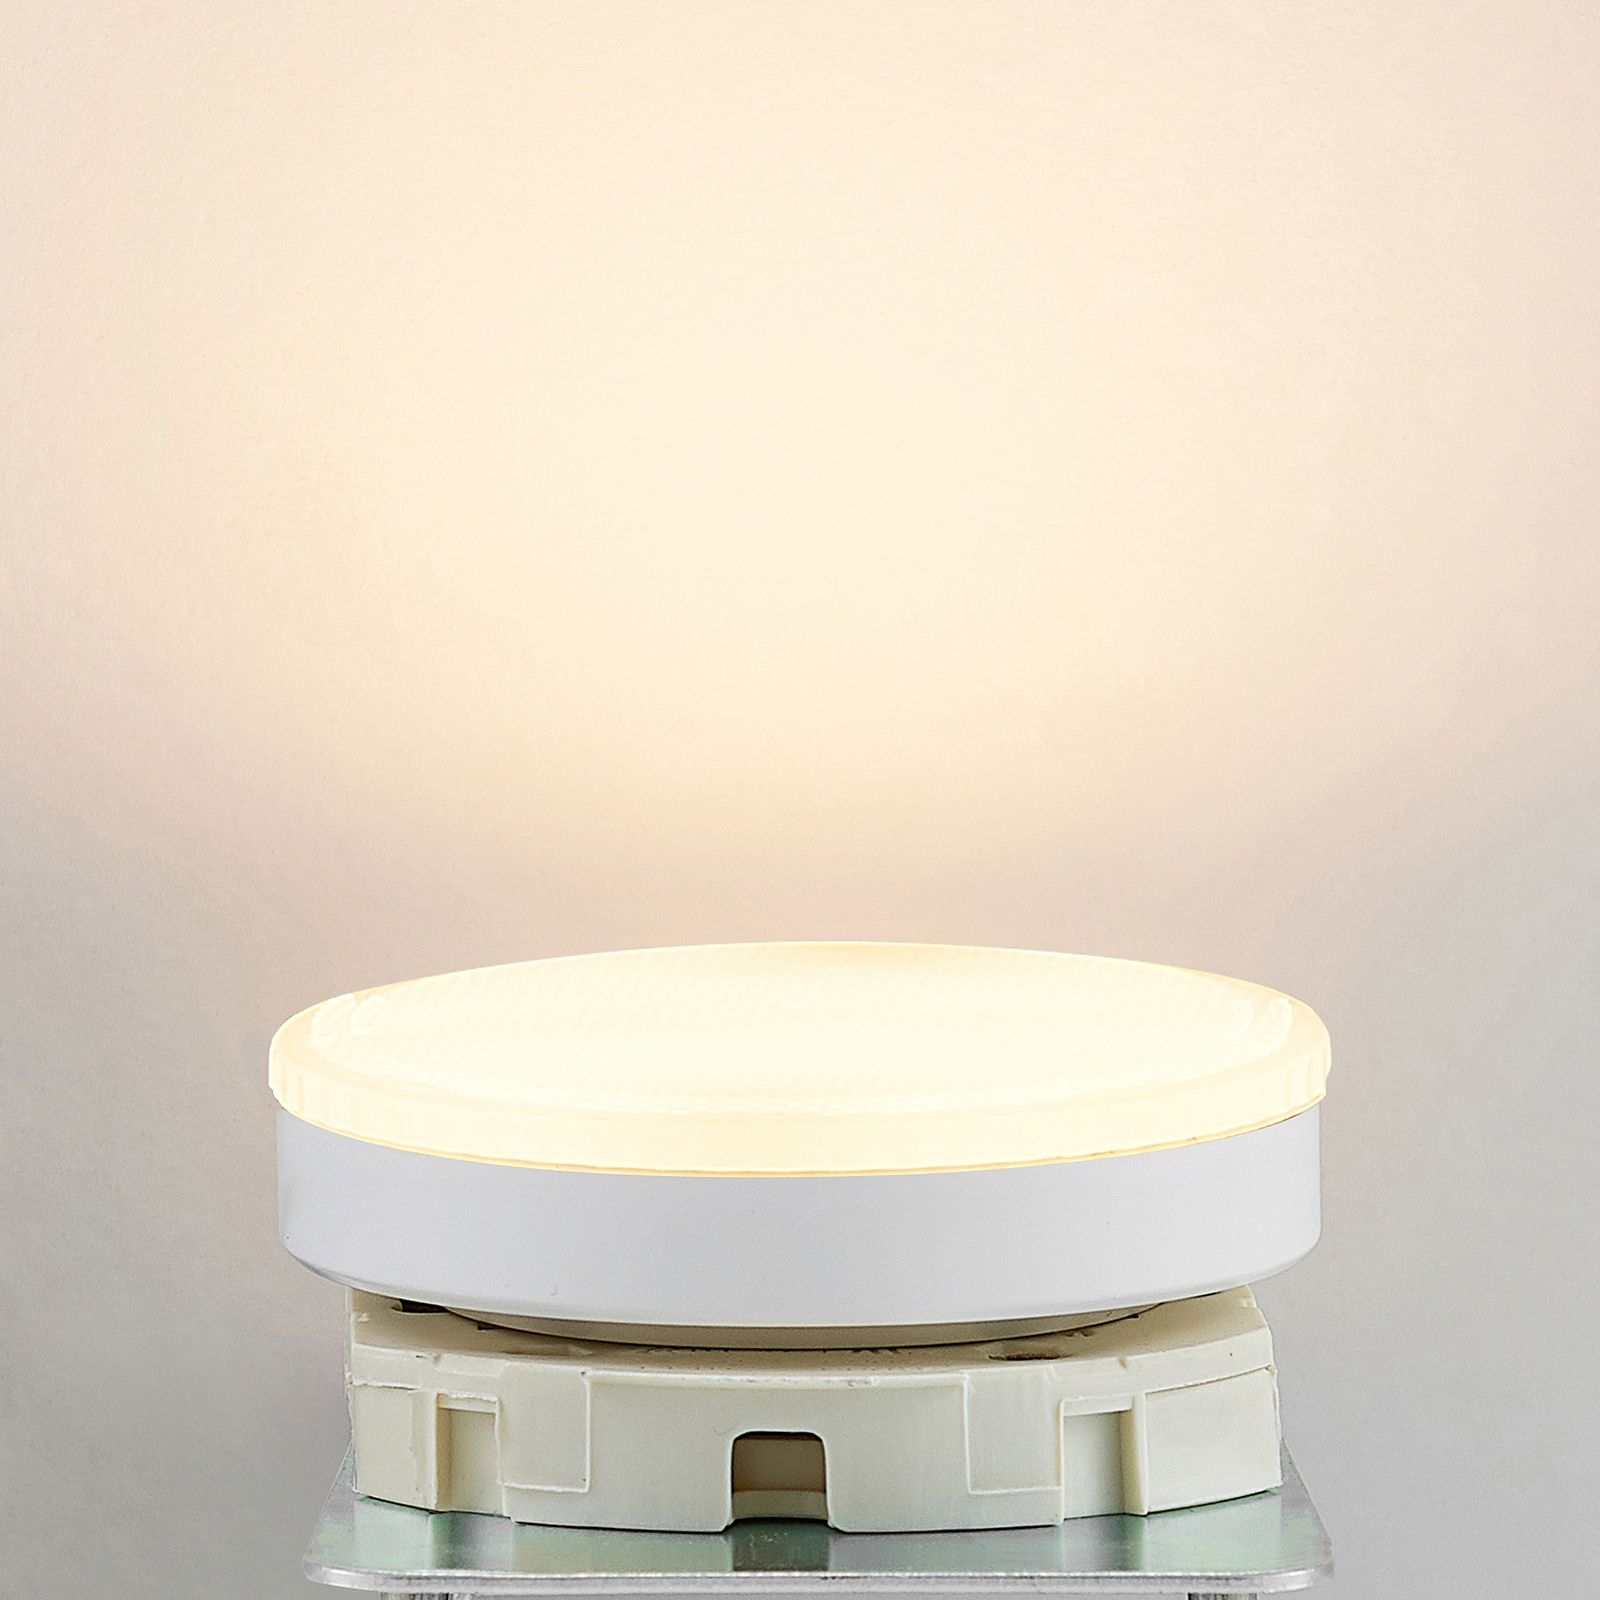 Arcchio LED bulb GX53 8 W 3,000 K 3-pack